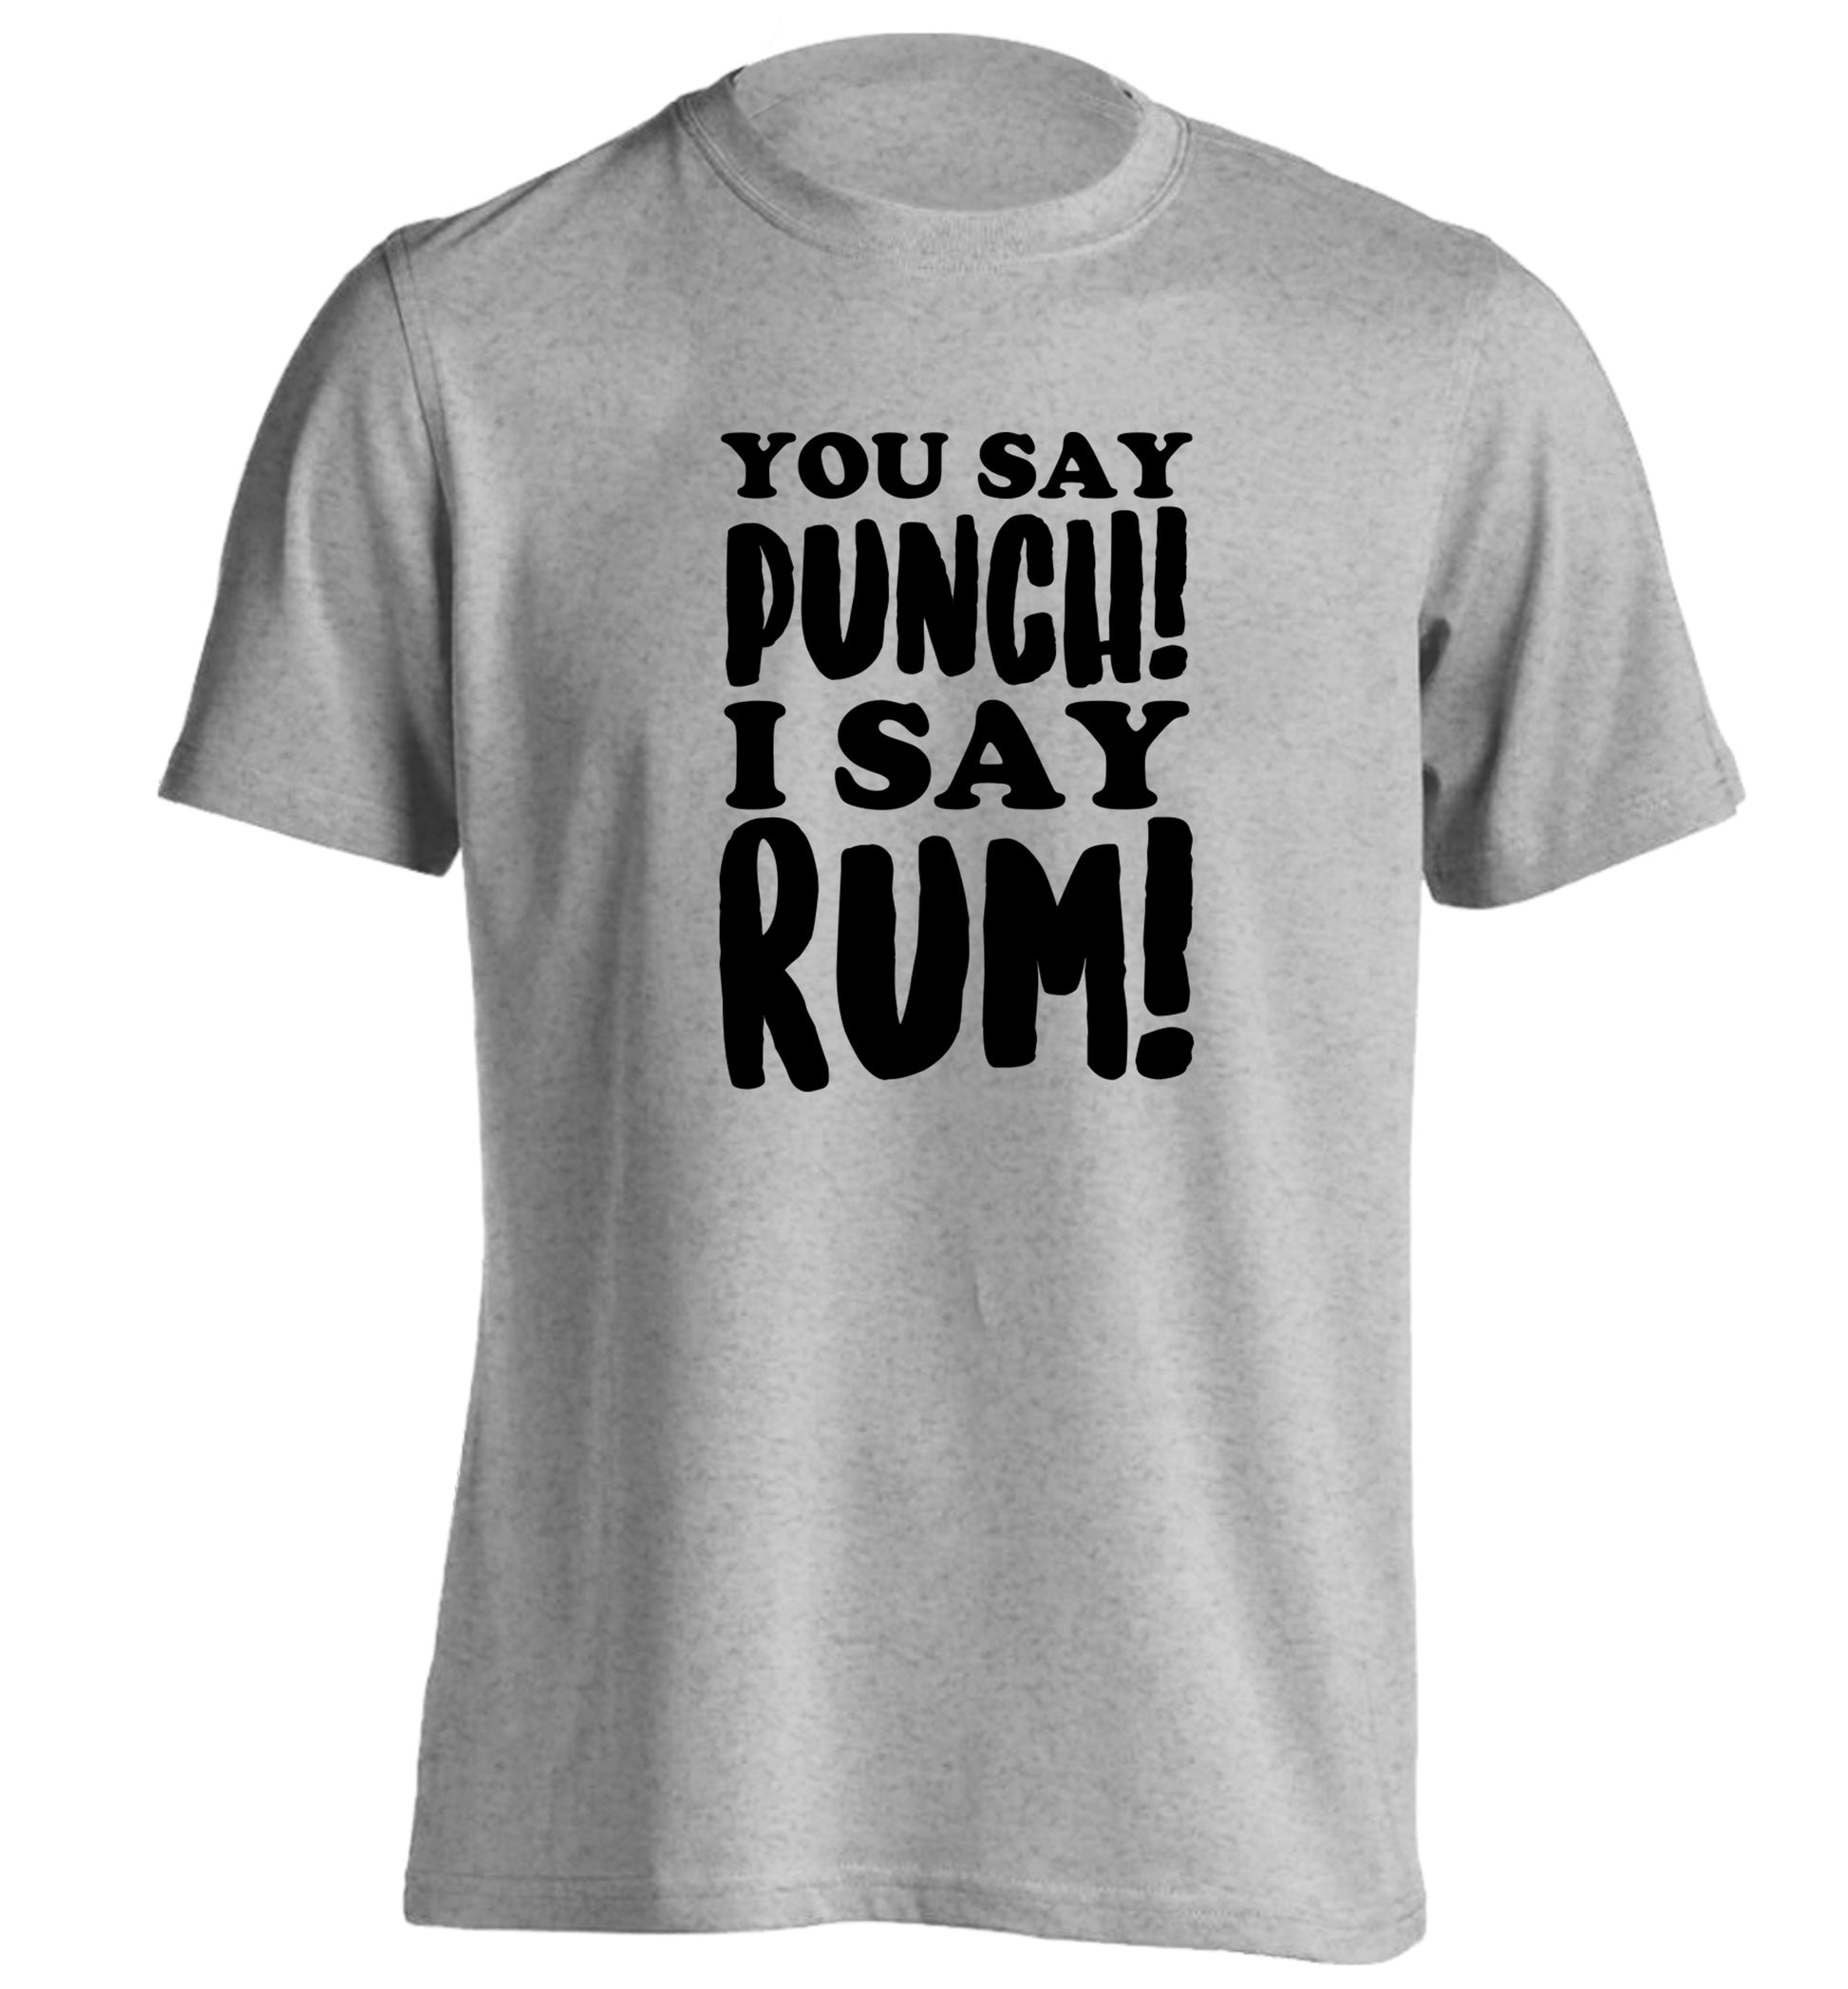 You say punch I say rum! adults unisex grey Tshirt 2XL